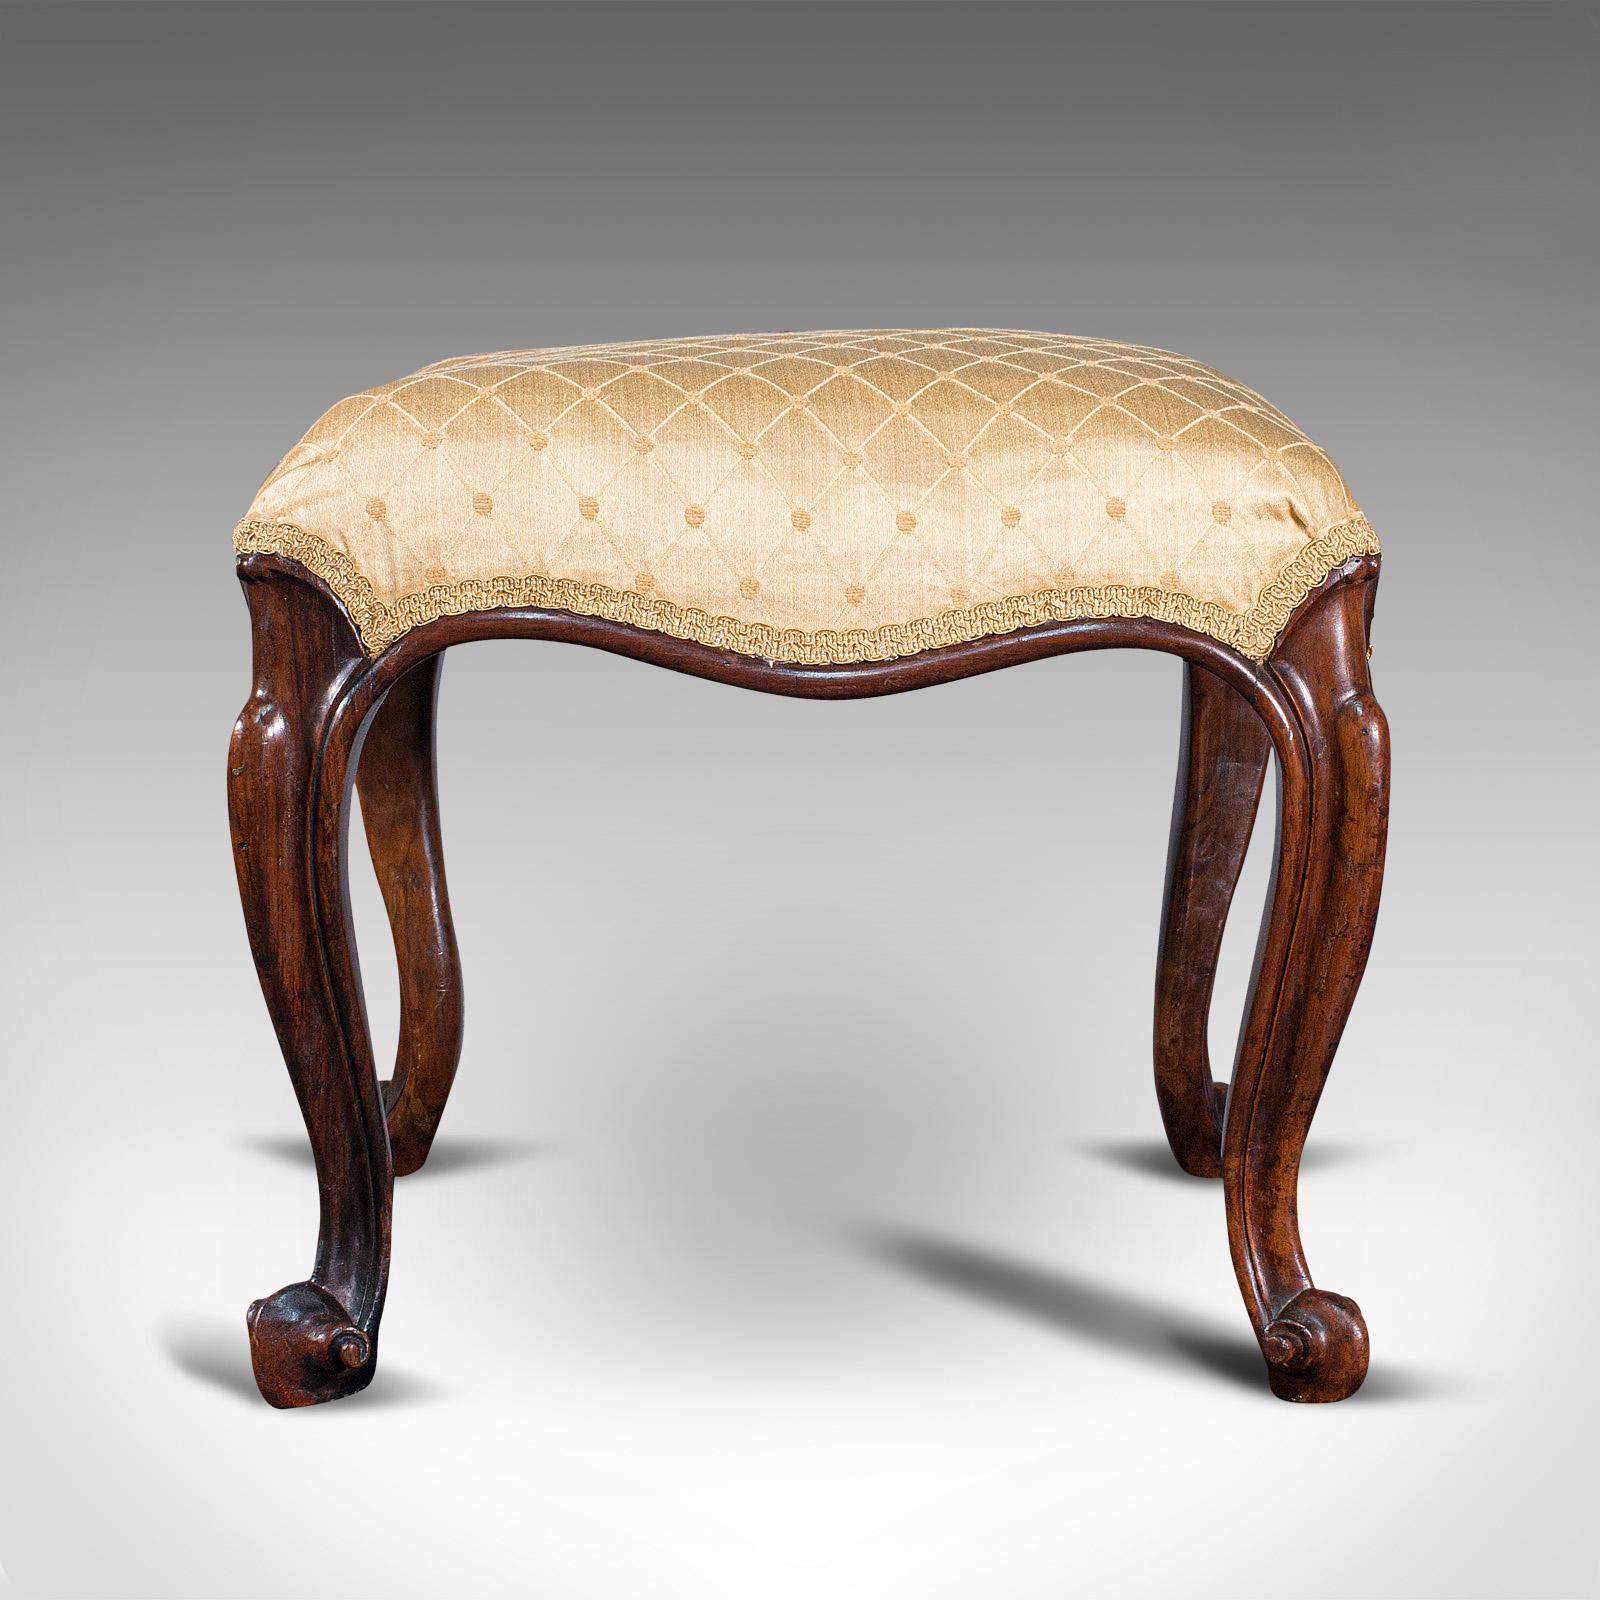 Antique Dressing Stool, English, Walnut, Upholstery, Boudoir Seat, Regency, 1820 For Sale 1